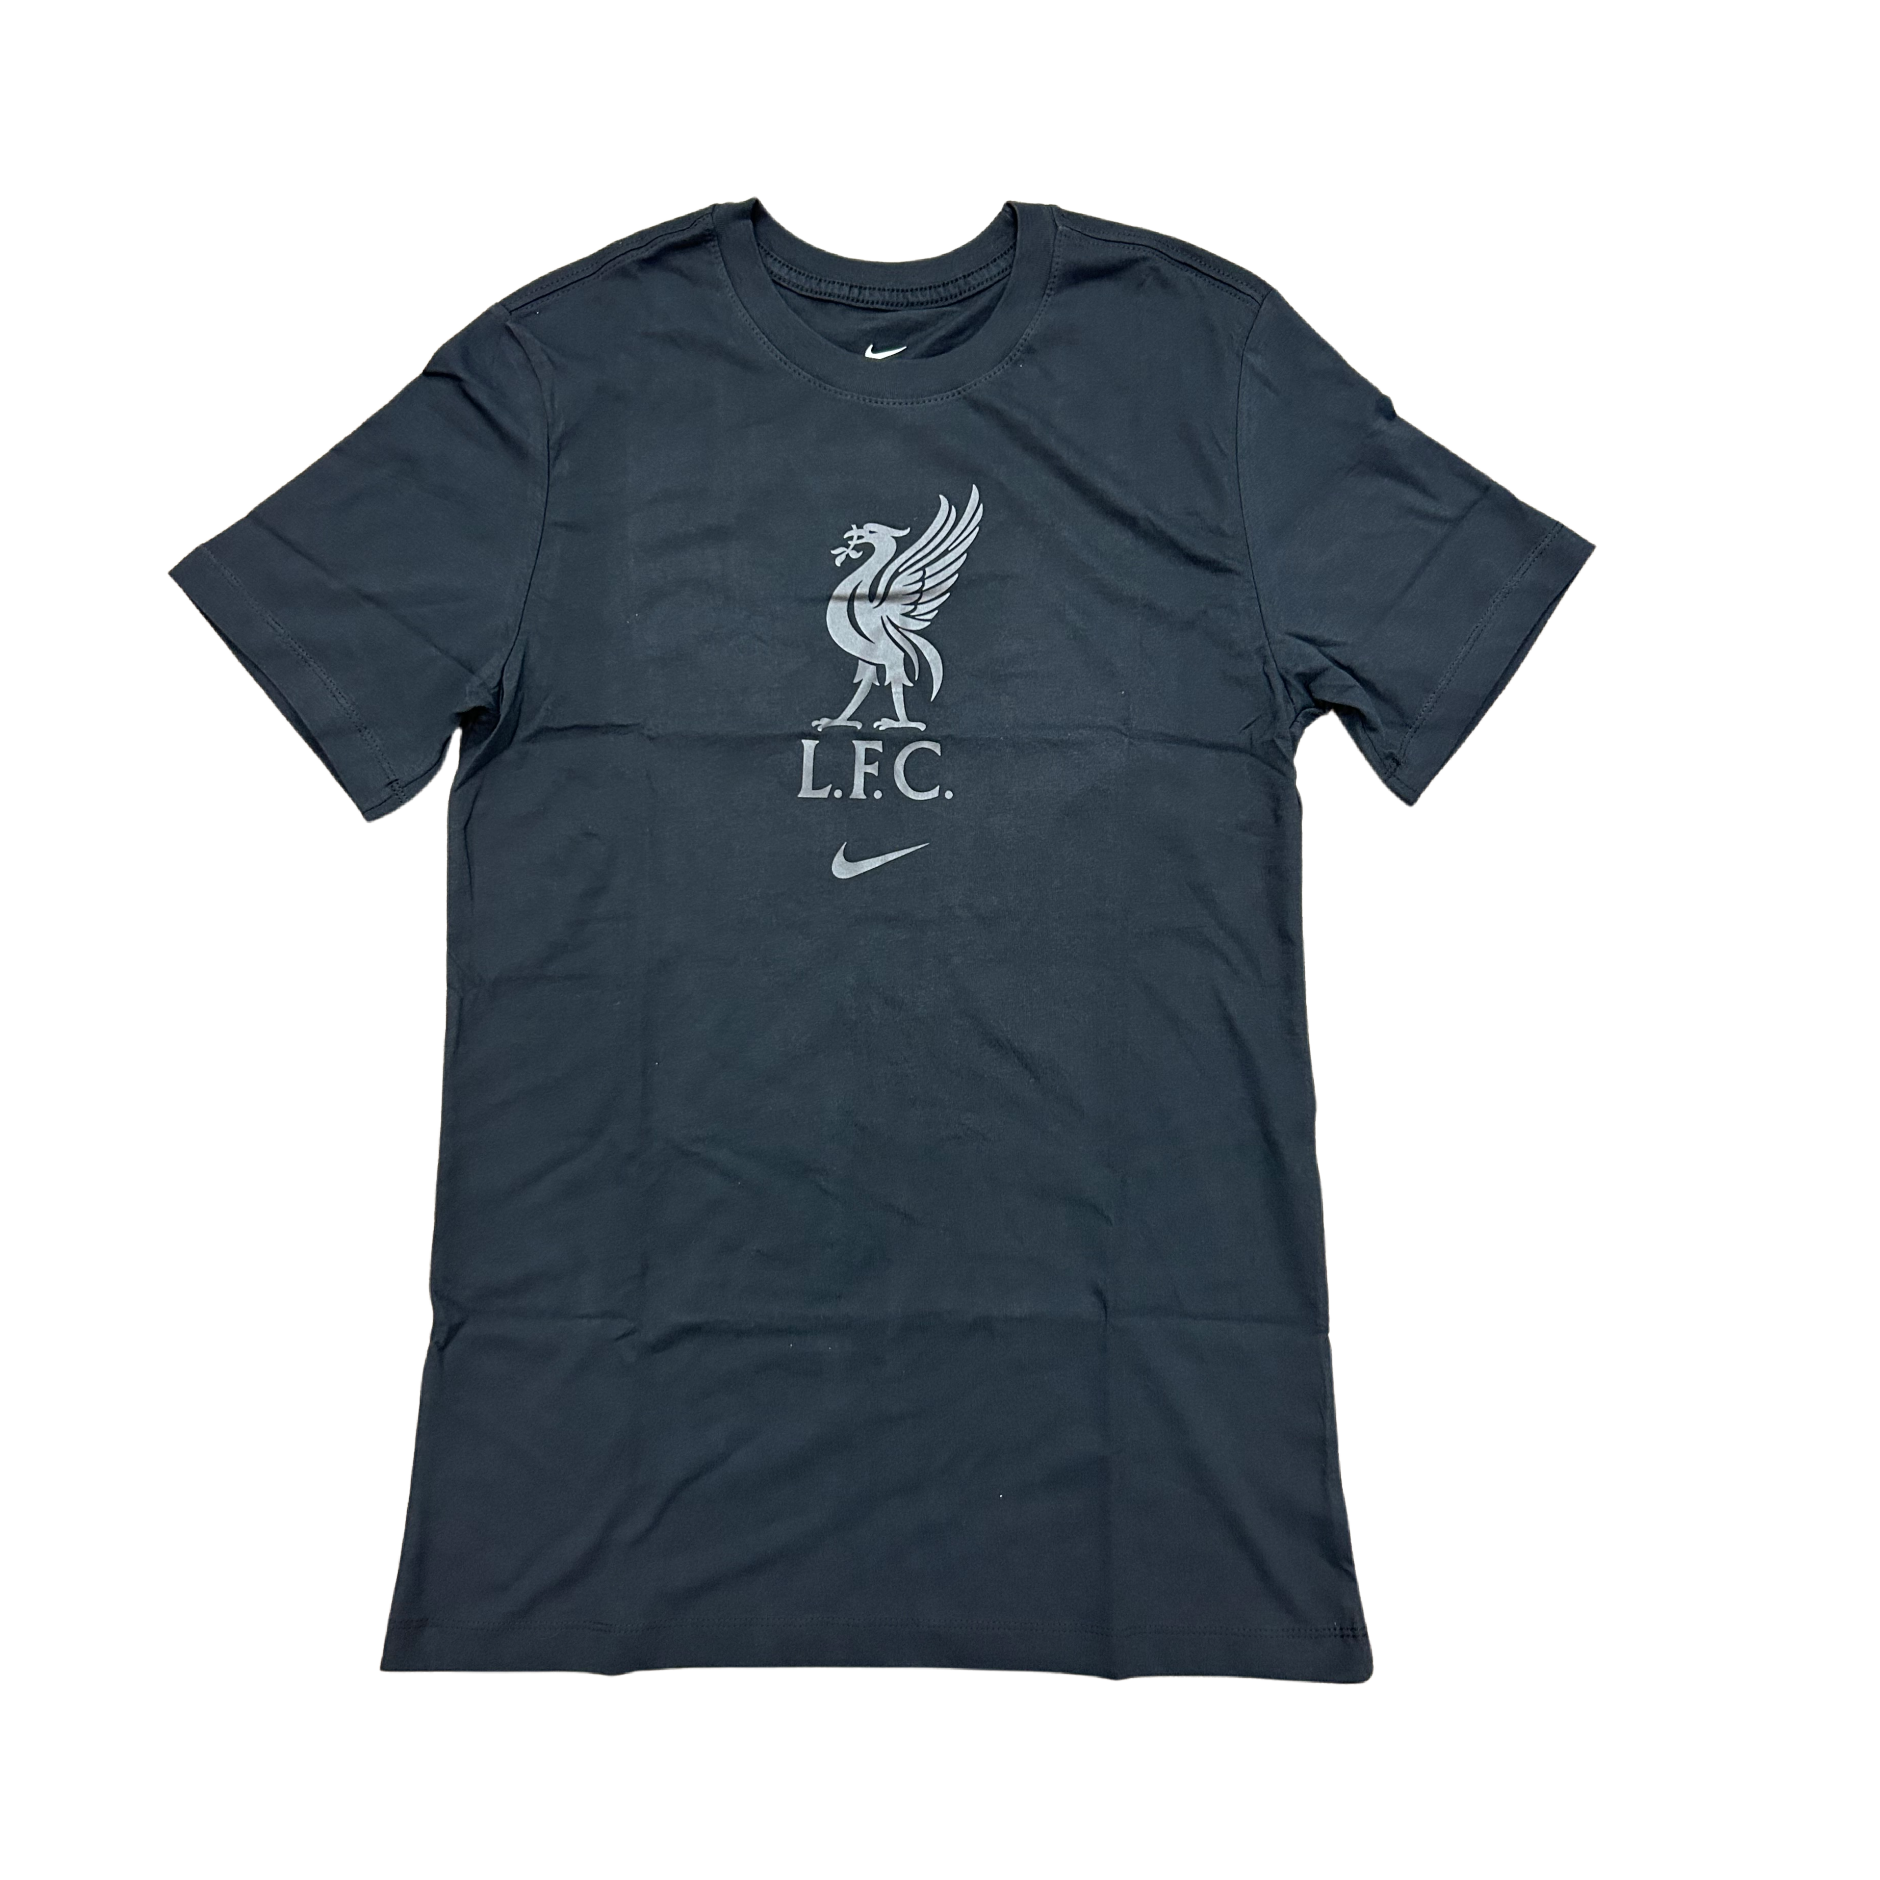 NikeLiverpool FC Men's Soccer T-Shirt